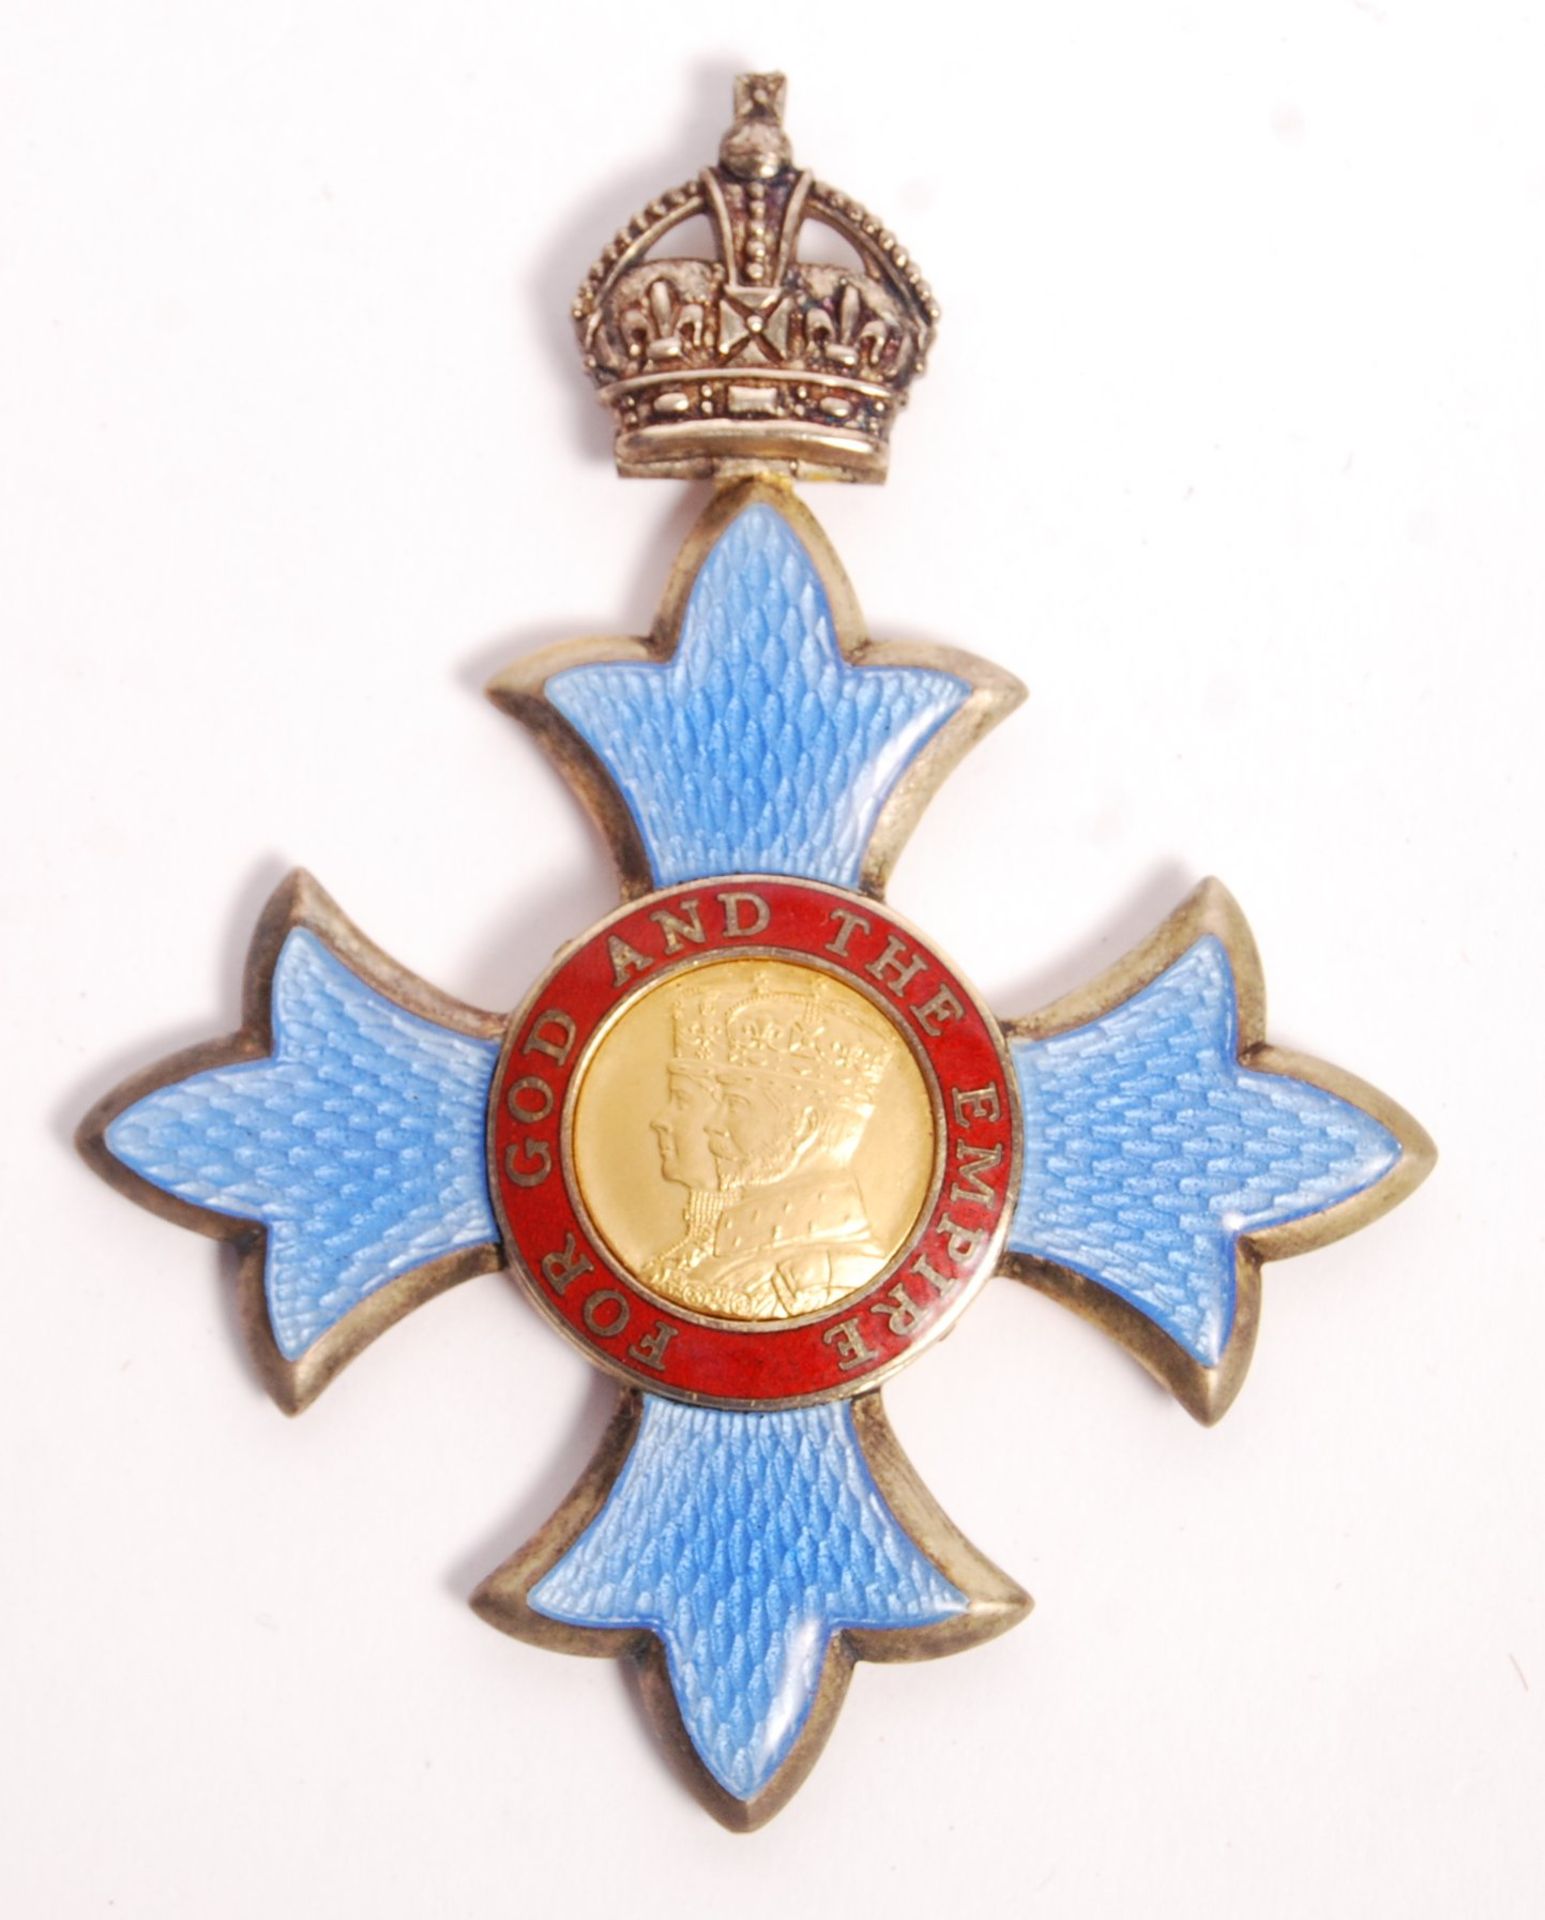 ORIGINAL CBE COMMANDER BRITISH EMPIRE MEDAL WITH BOX - Image 2 of 4